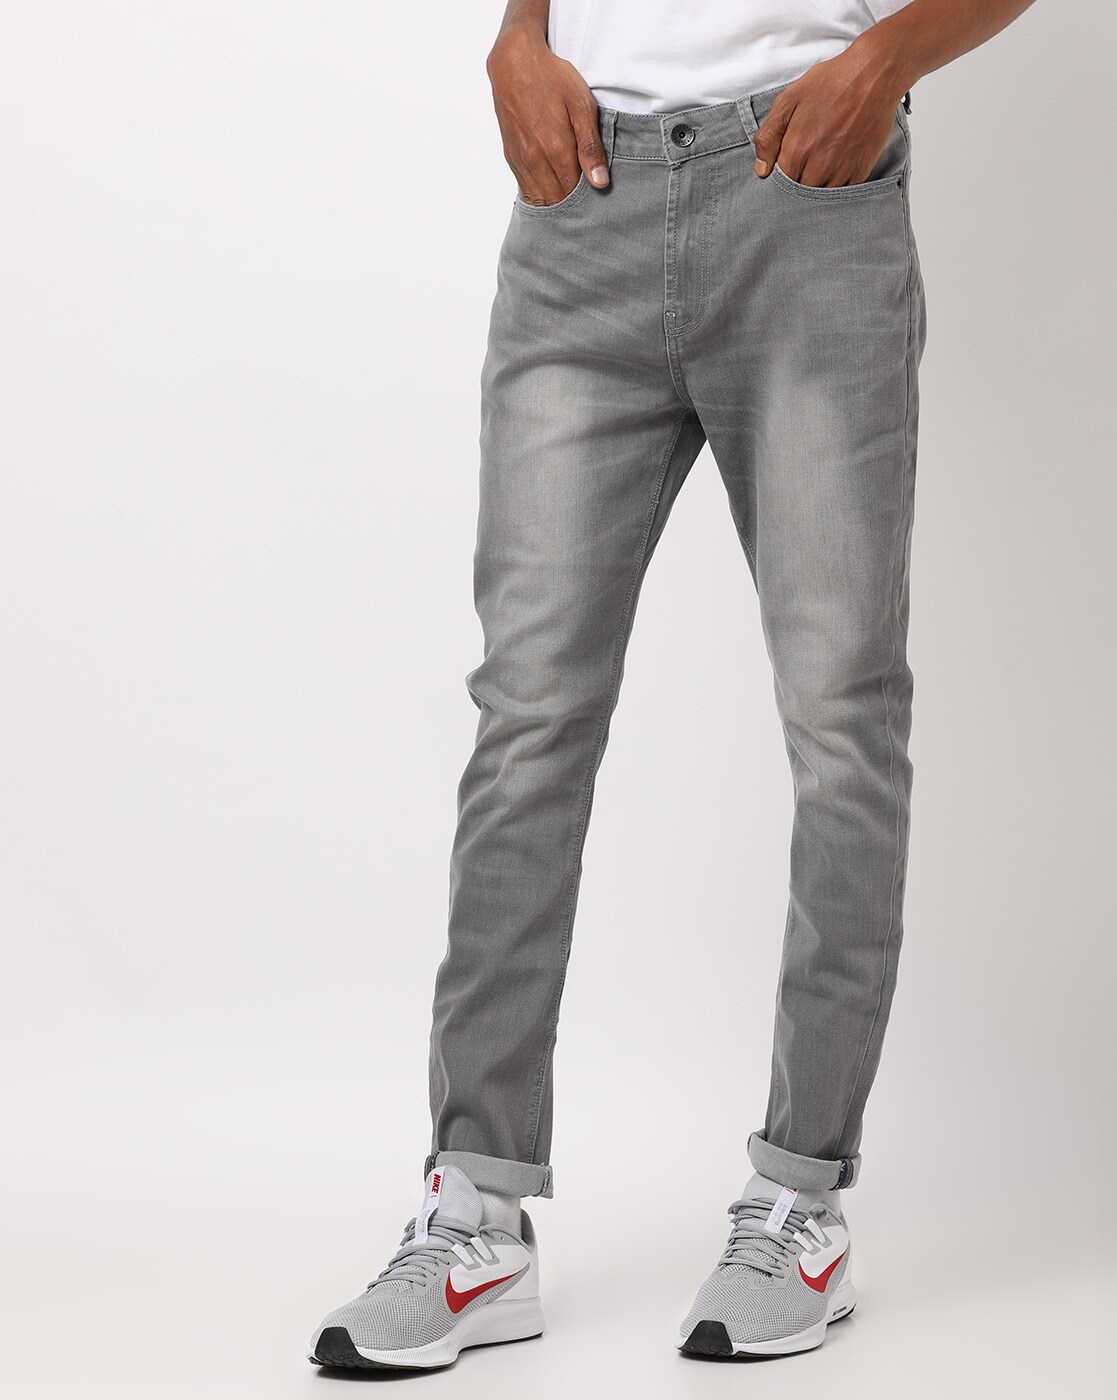 ucb grey jeans